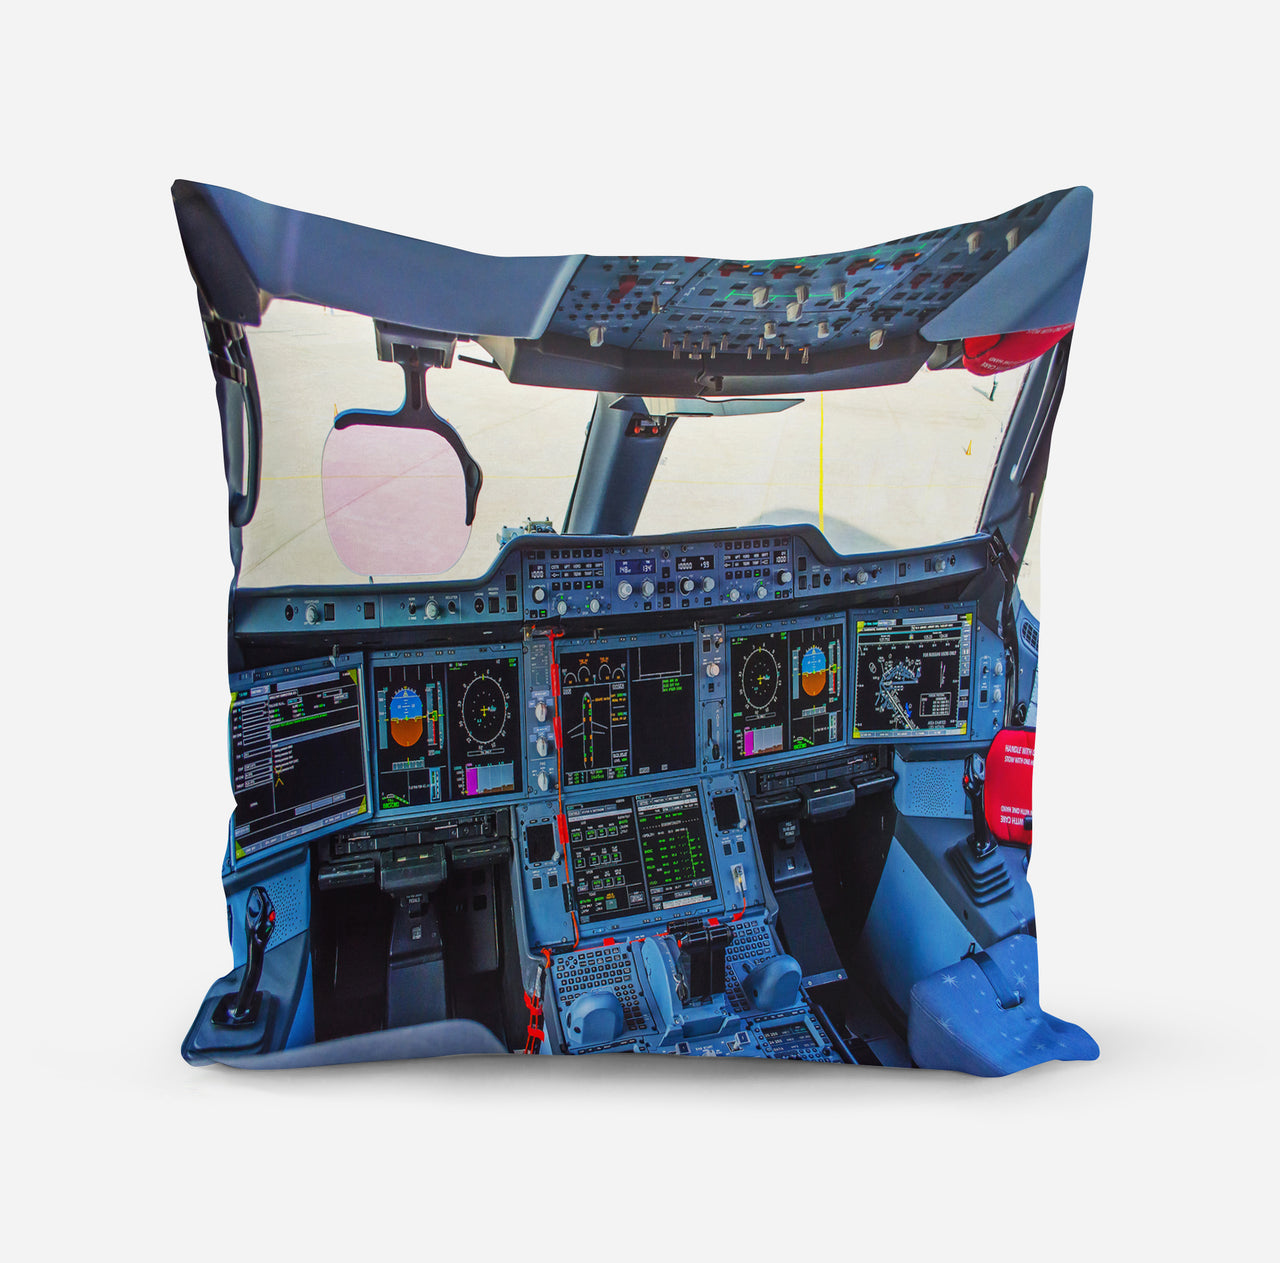 Airbus A350 Cockpit Designed Pillows